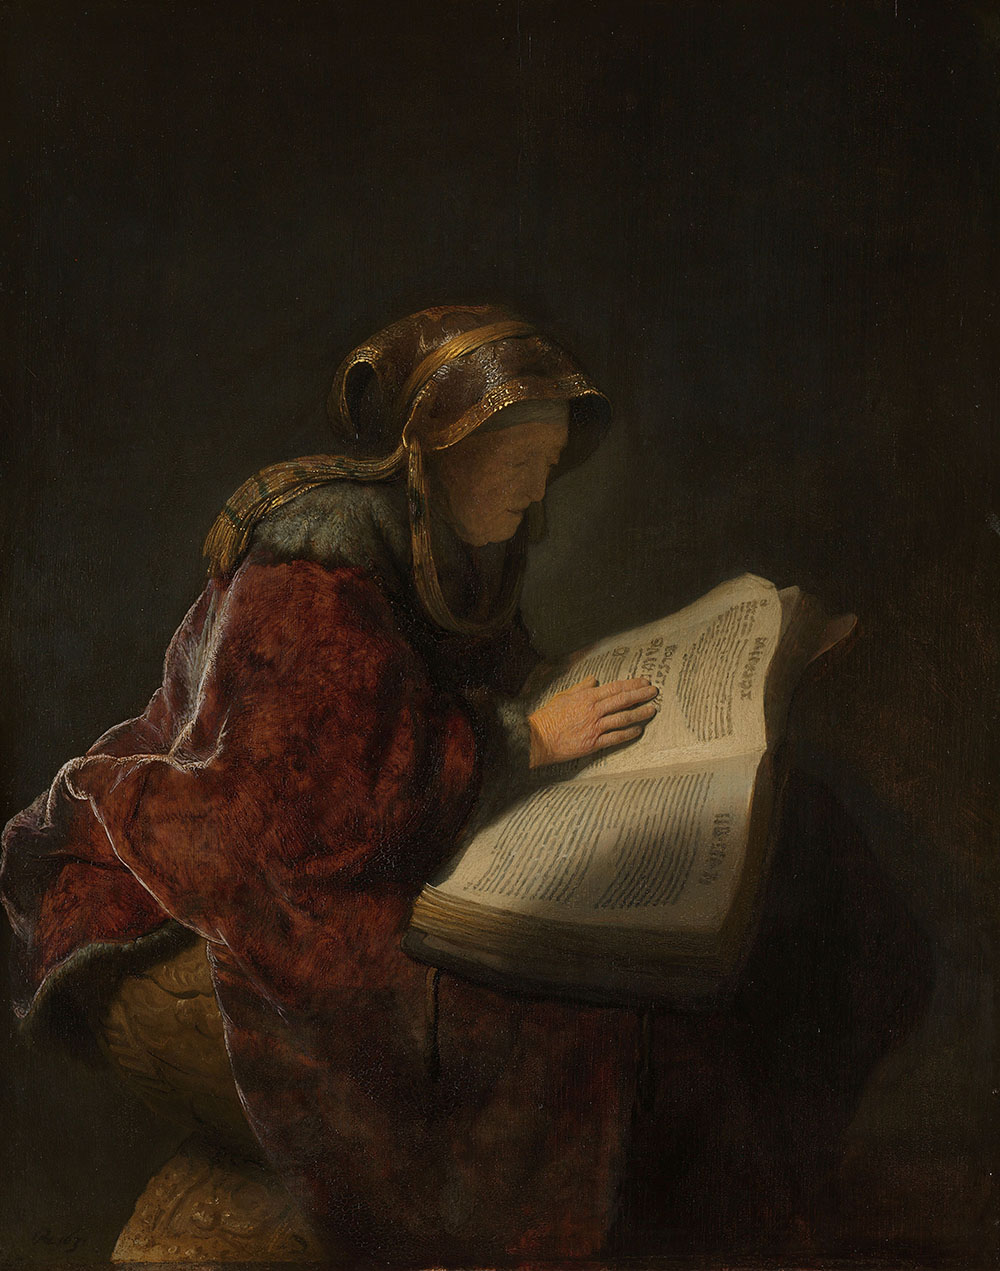 Old Woman Reading, by Rembrandt van Rijn, 1631.